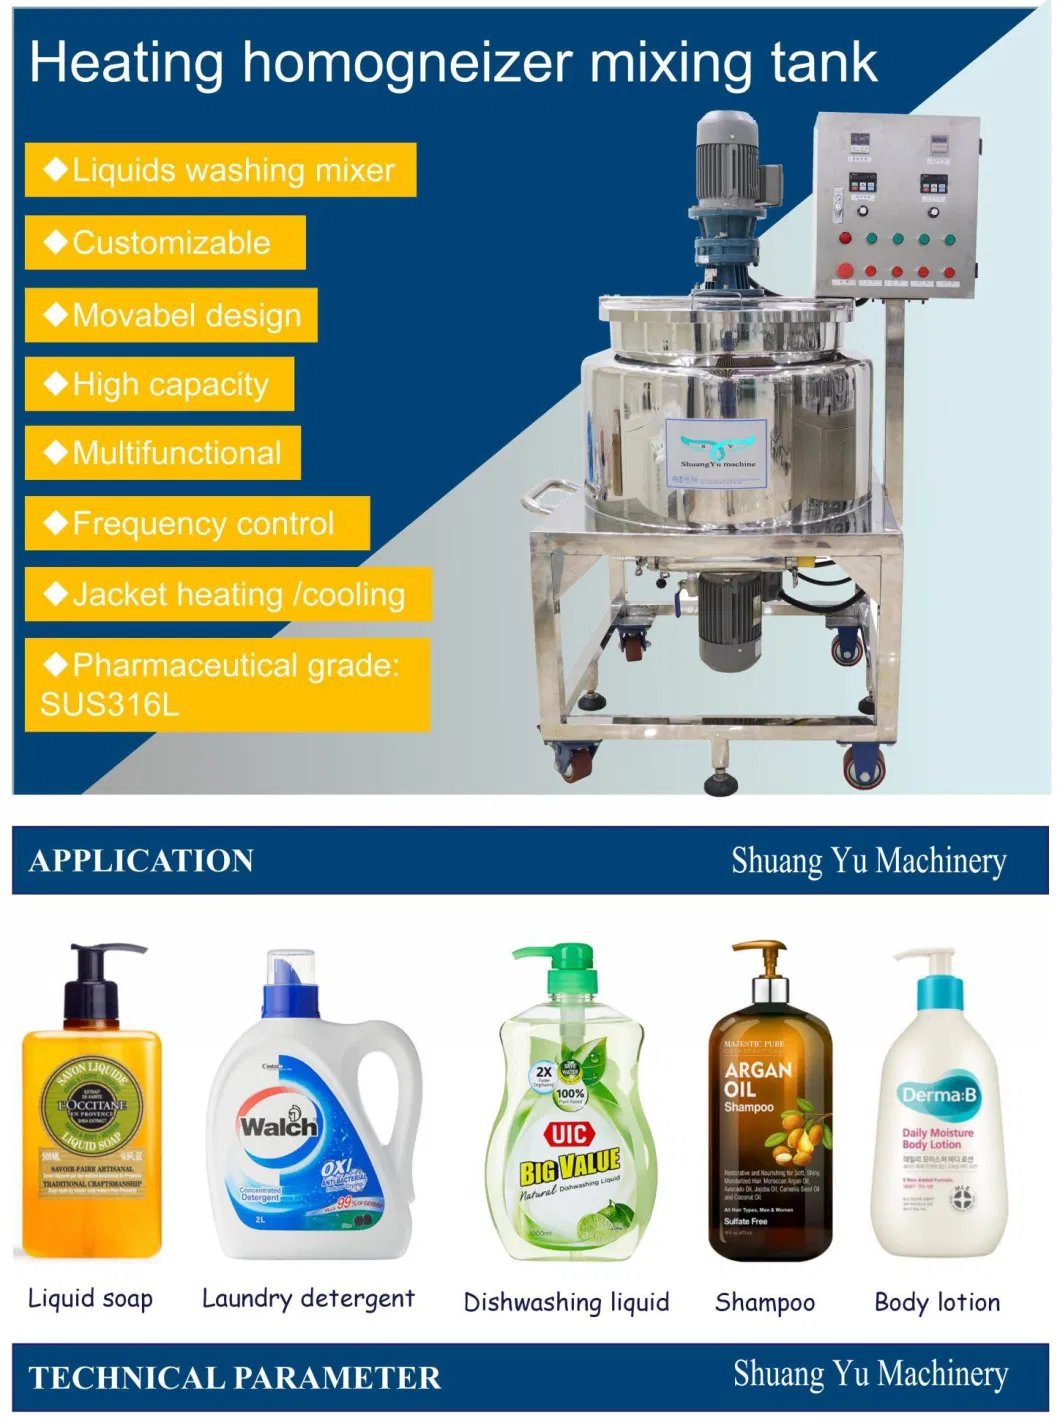 Hand Sanitizer Shower Gel Cosmetic Soap Shampoo Drink Alcohol Detergent Lotion Liquid Paint/Cream /Homogenizer/Emulsifier Mixer/Blending/Making Mixing Machine